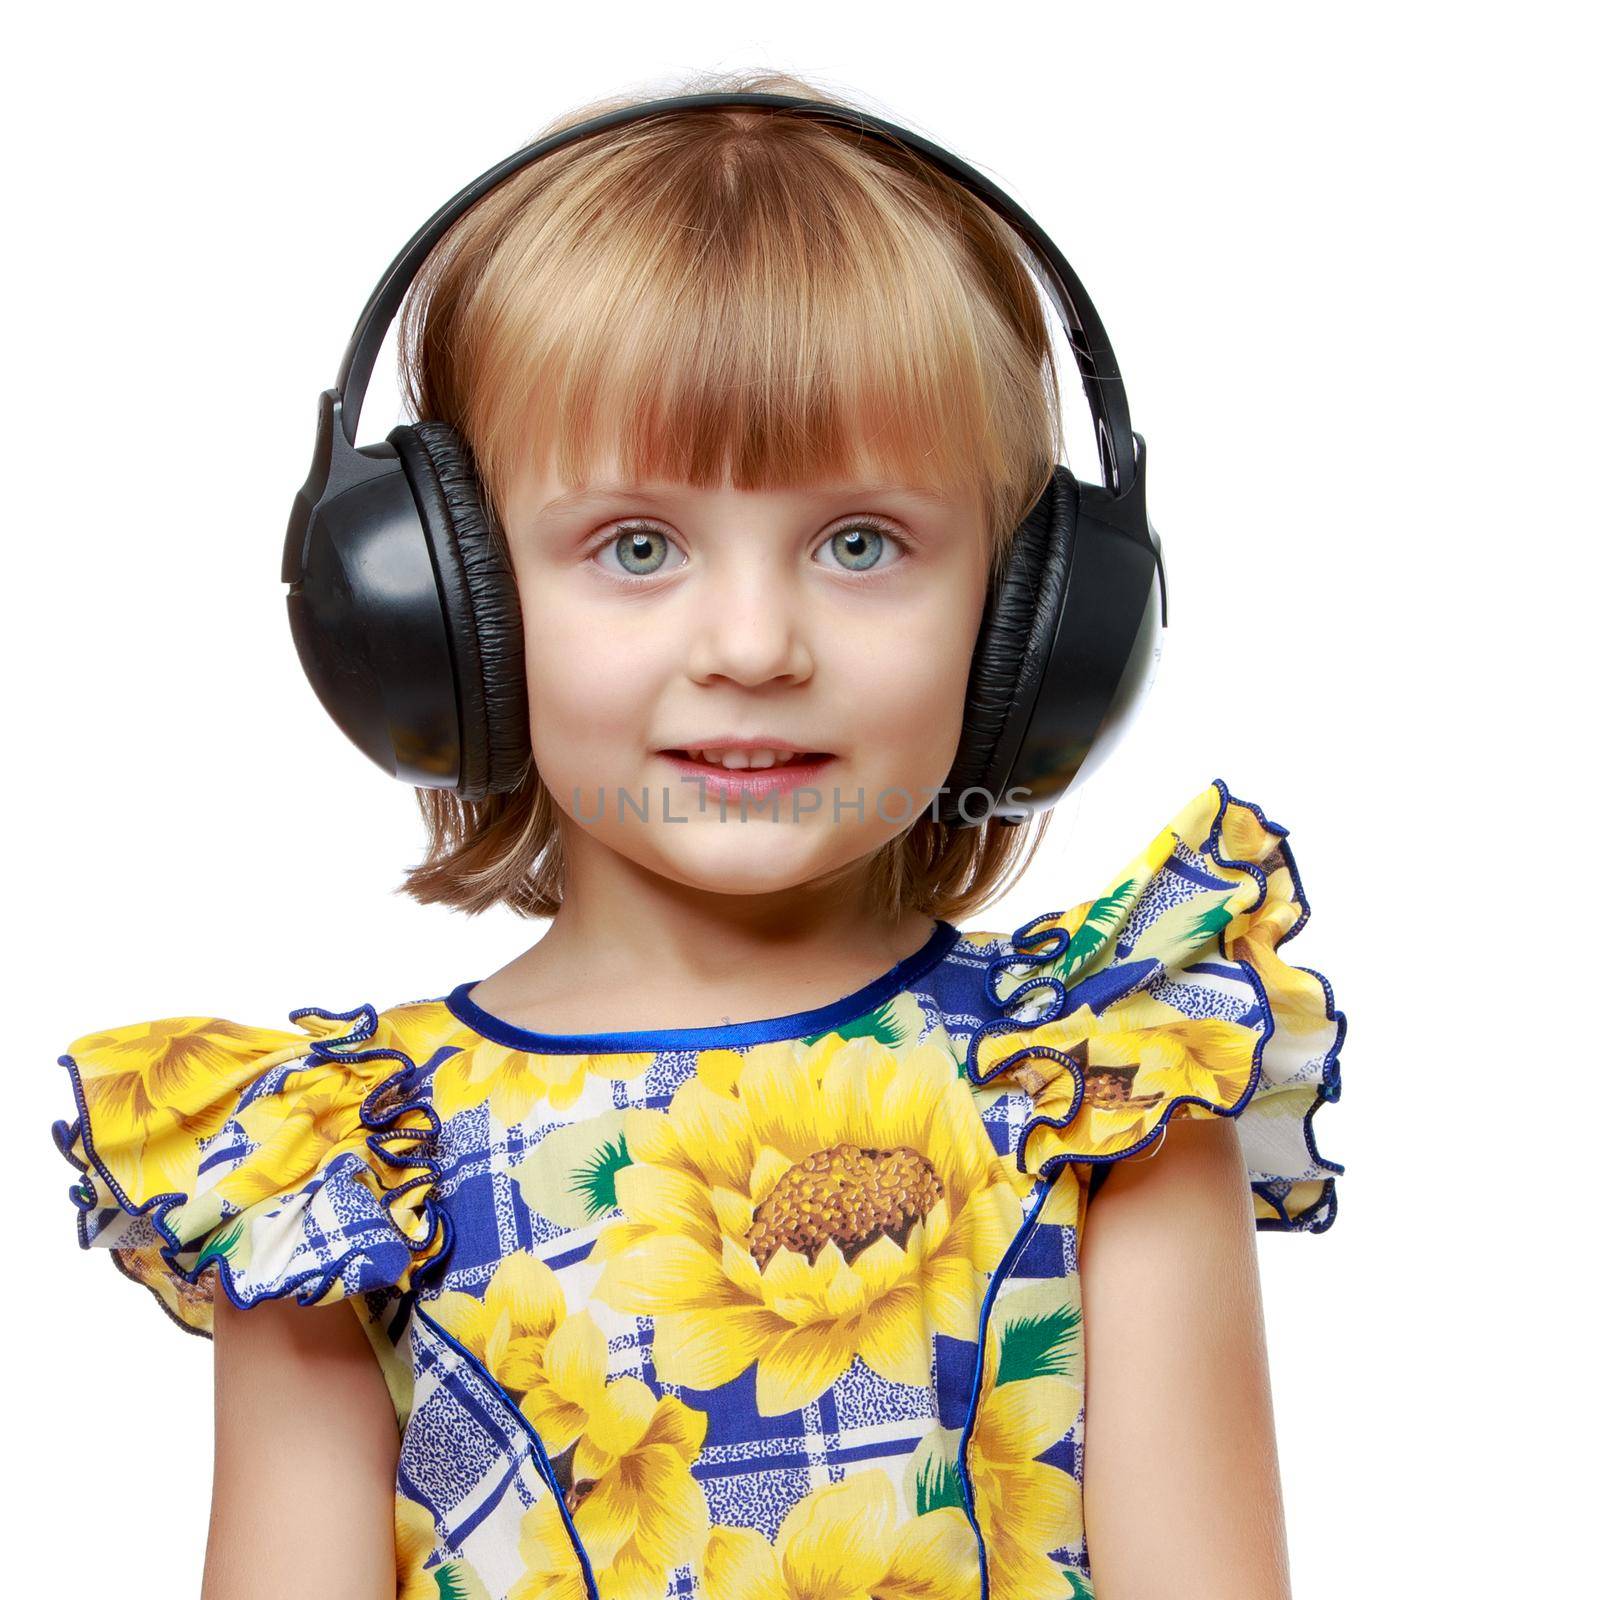 A little girl with headphones listening to music. by kolesnikov_studio